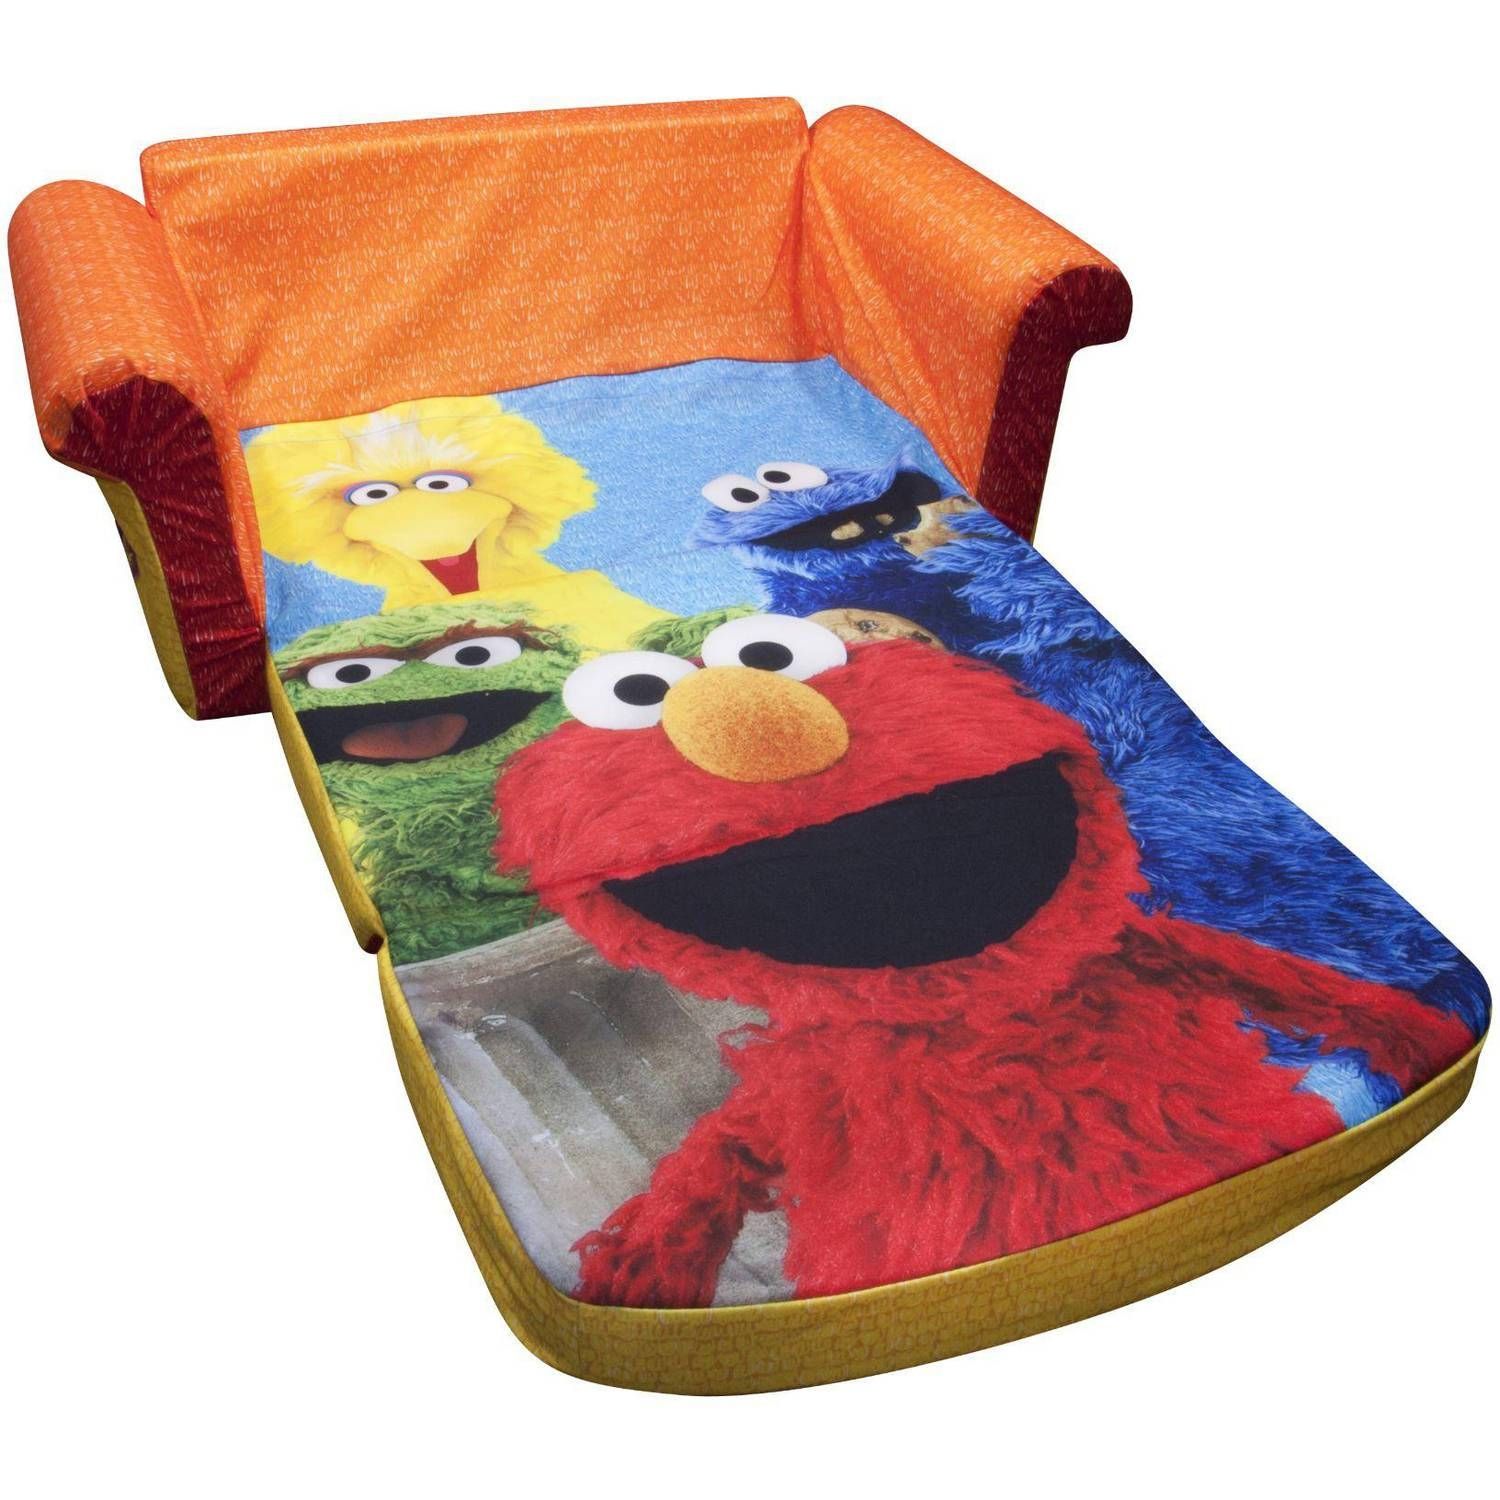 Marshmallow 2 In 1 Flip Open Sofa, Sesame Street's Elmo – Walmart In Flip Open Sofas For Toddlers (View 1 of 15)